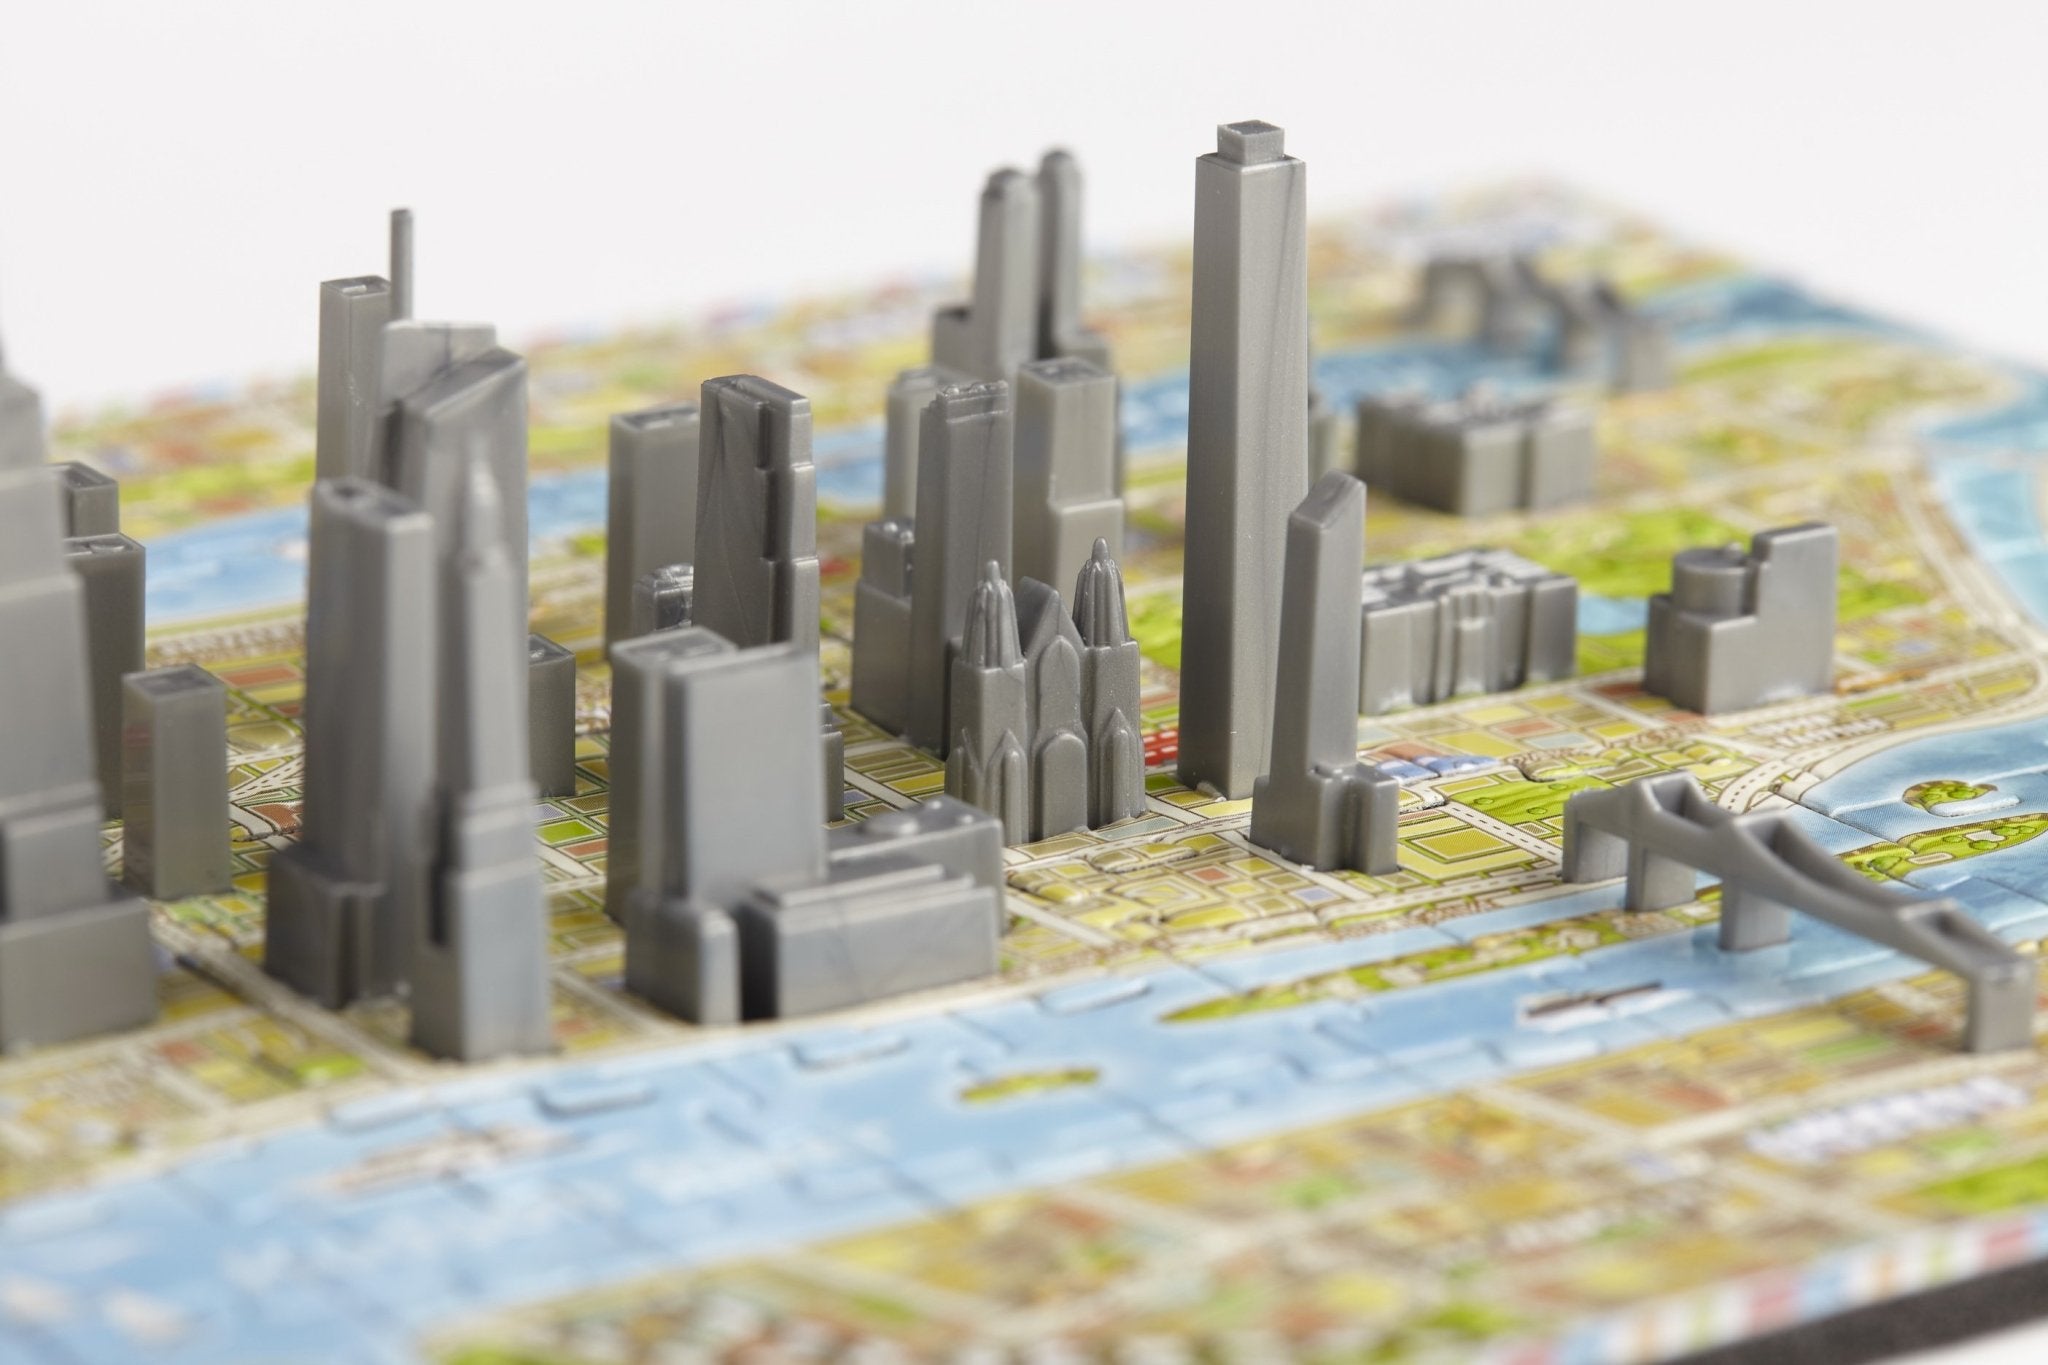 4D Cityscape Mini NEW YORK Puzzle - 4DPuzz - 4DPuzz
